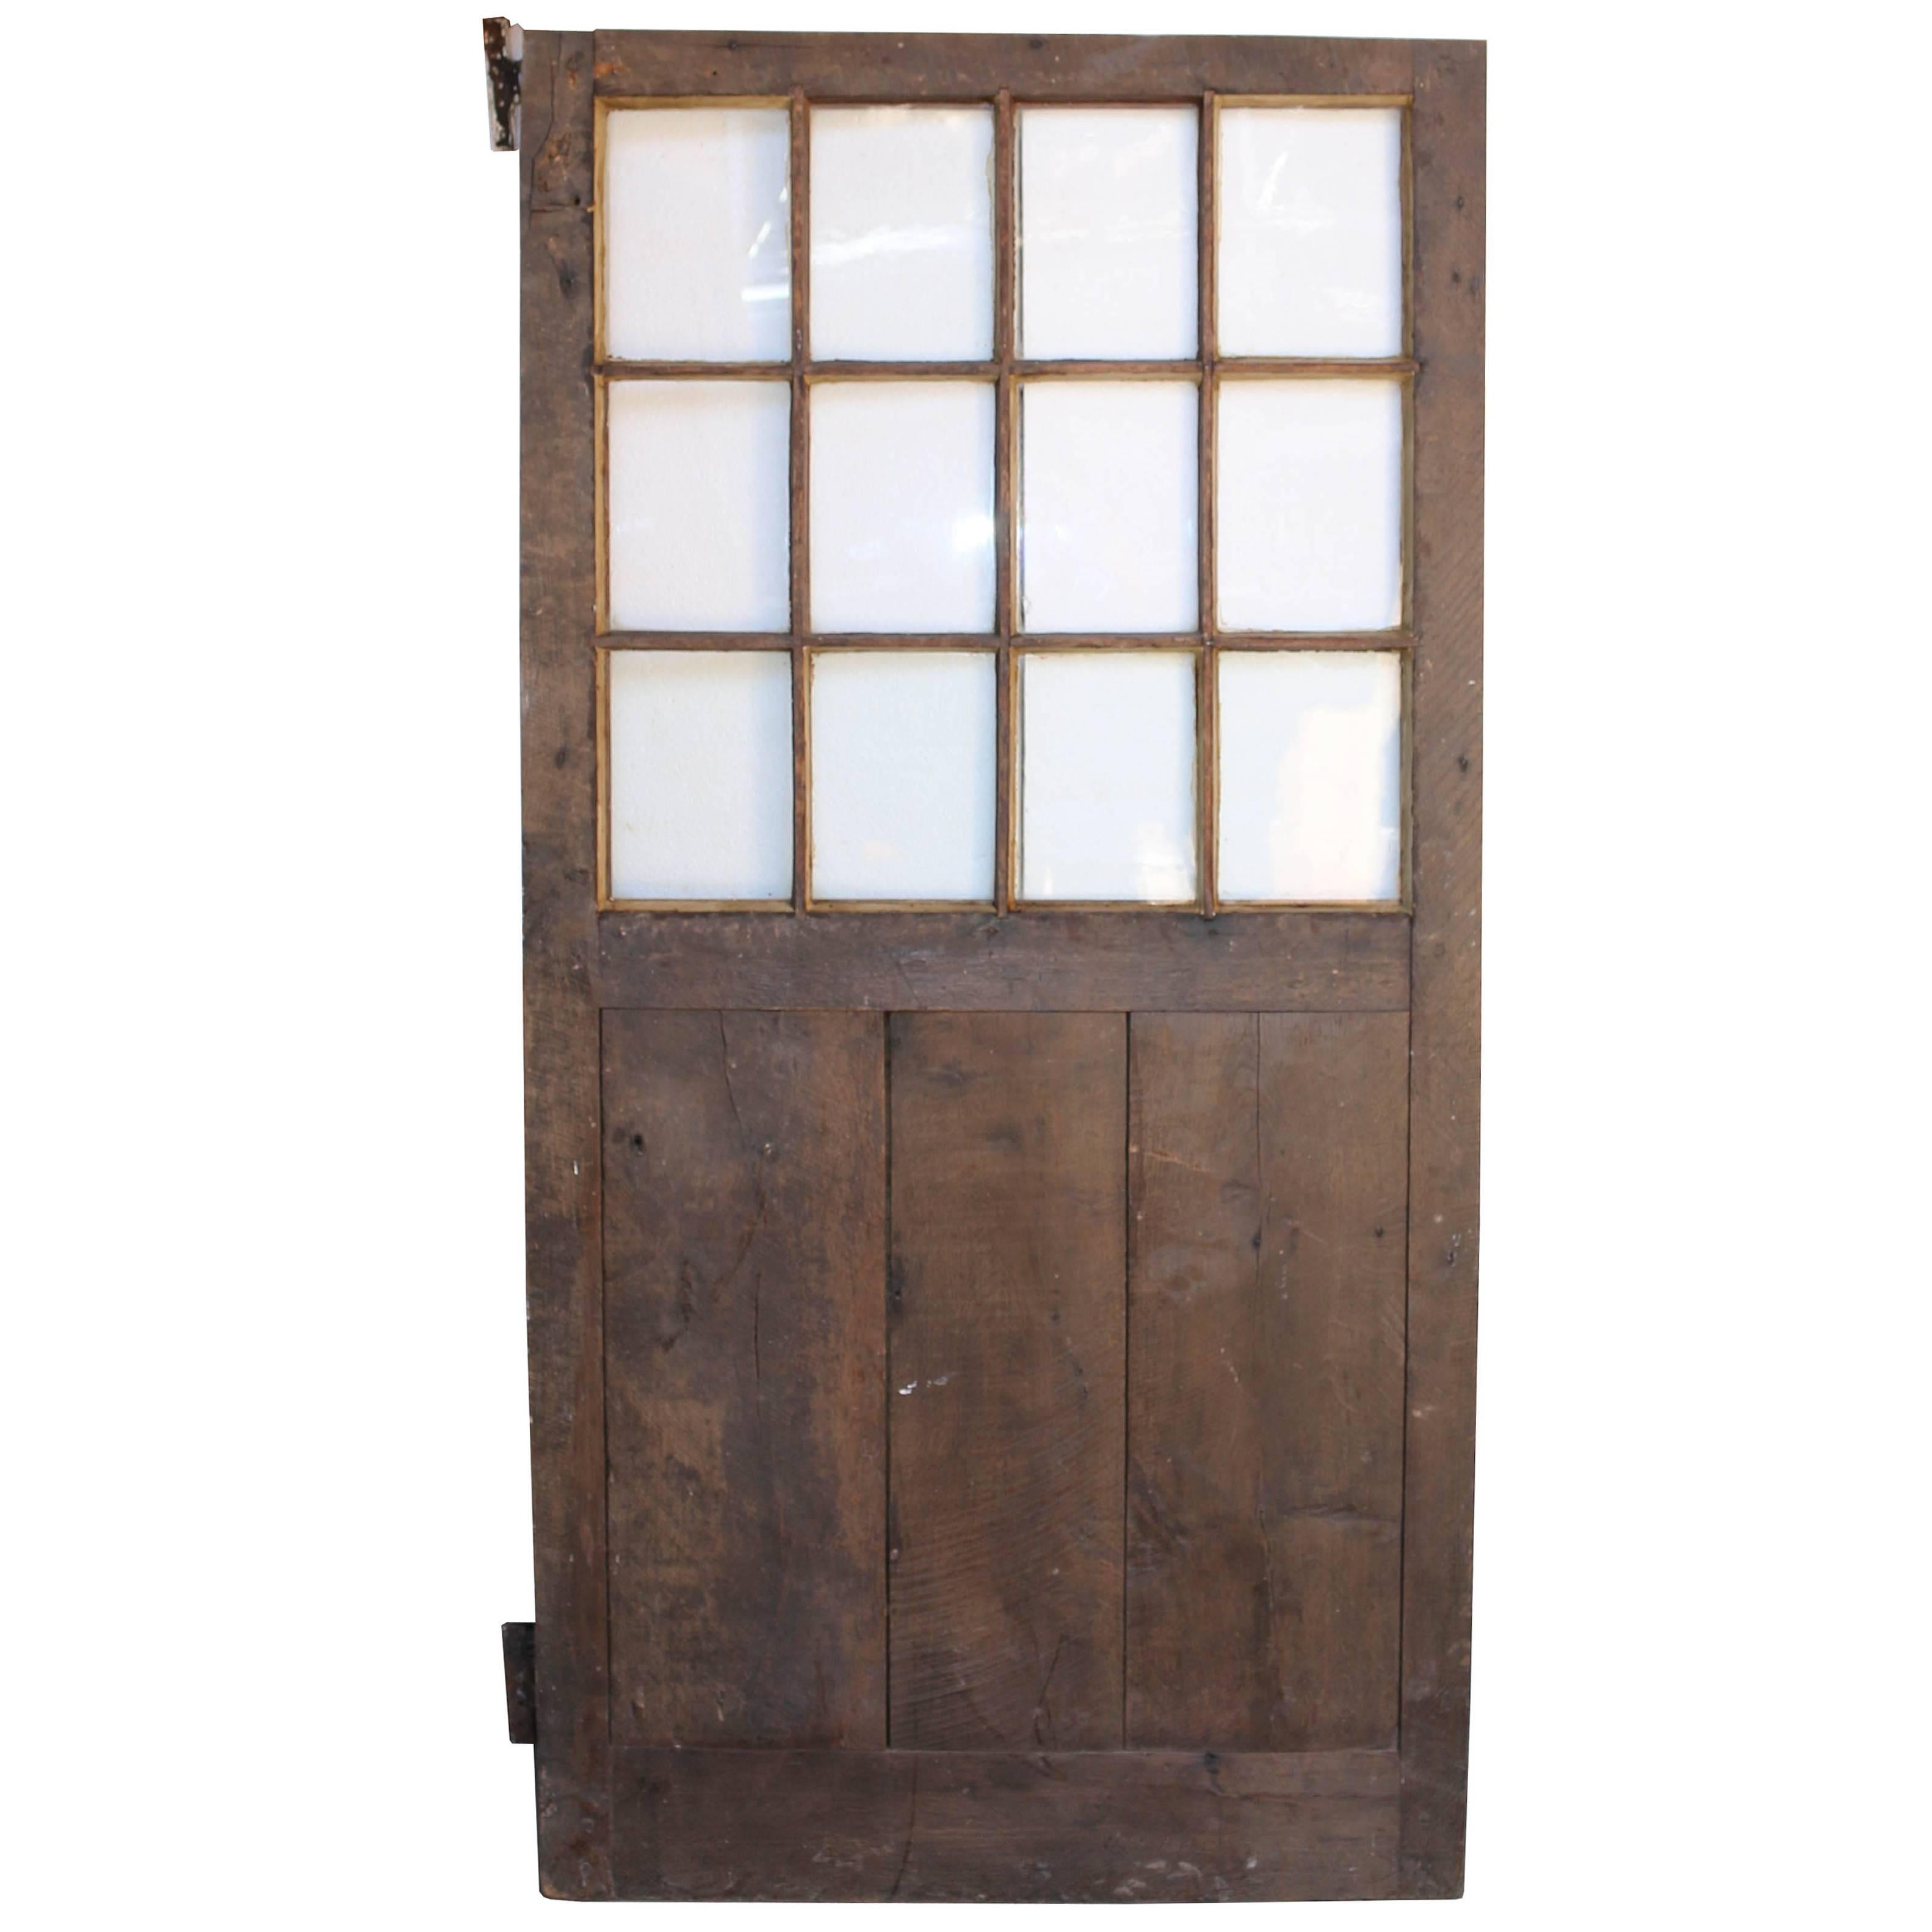 Late 18th Century English Glazed Oak Door